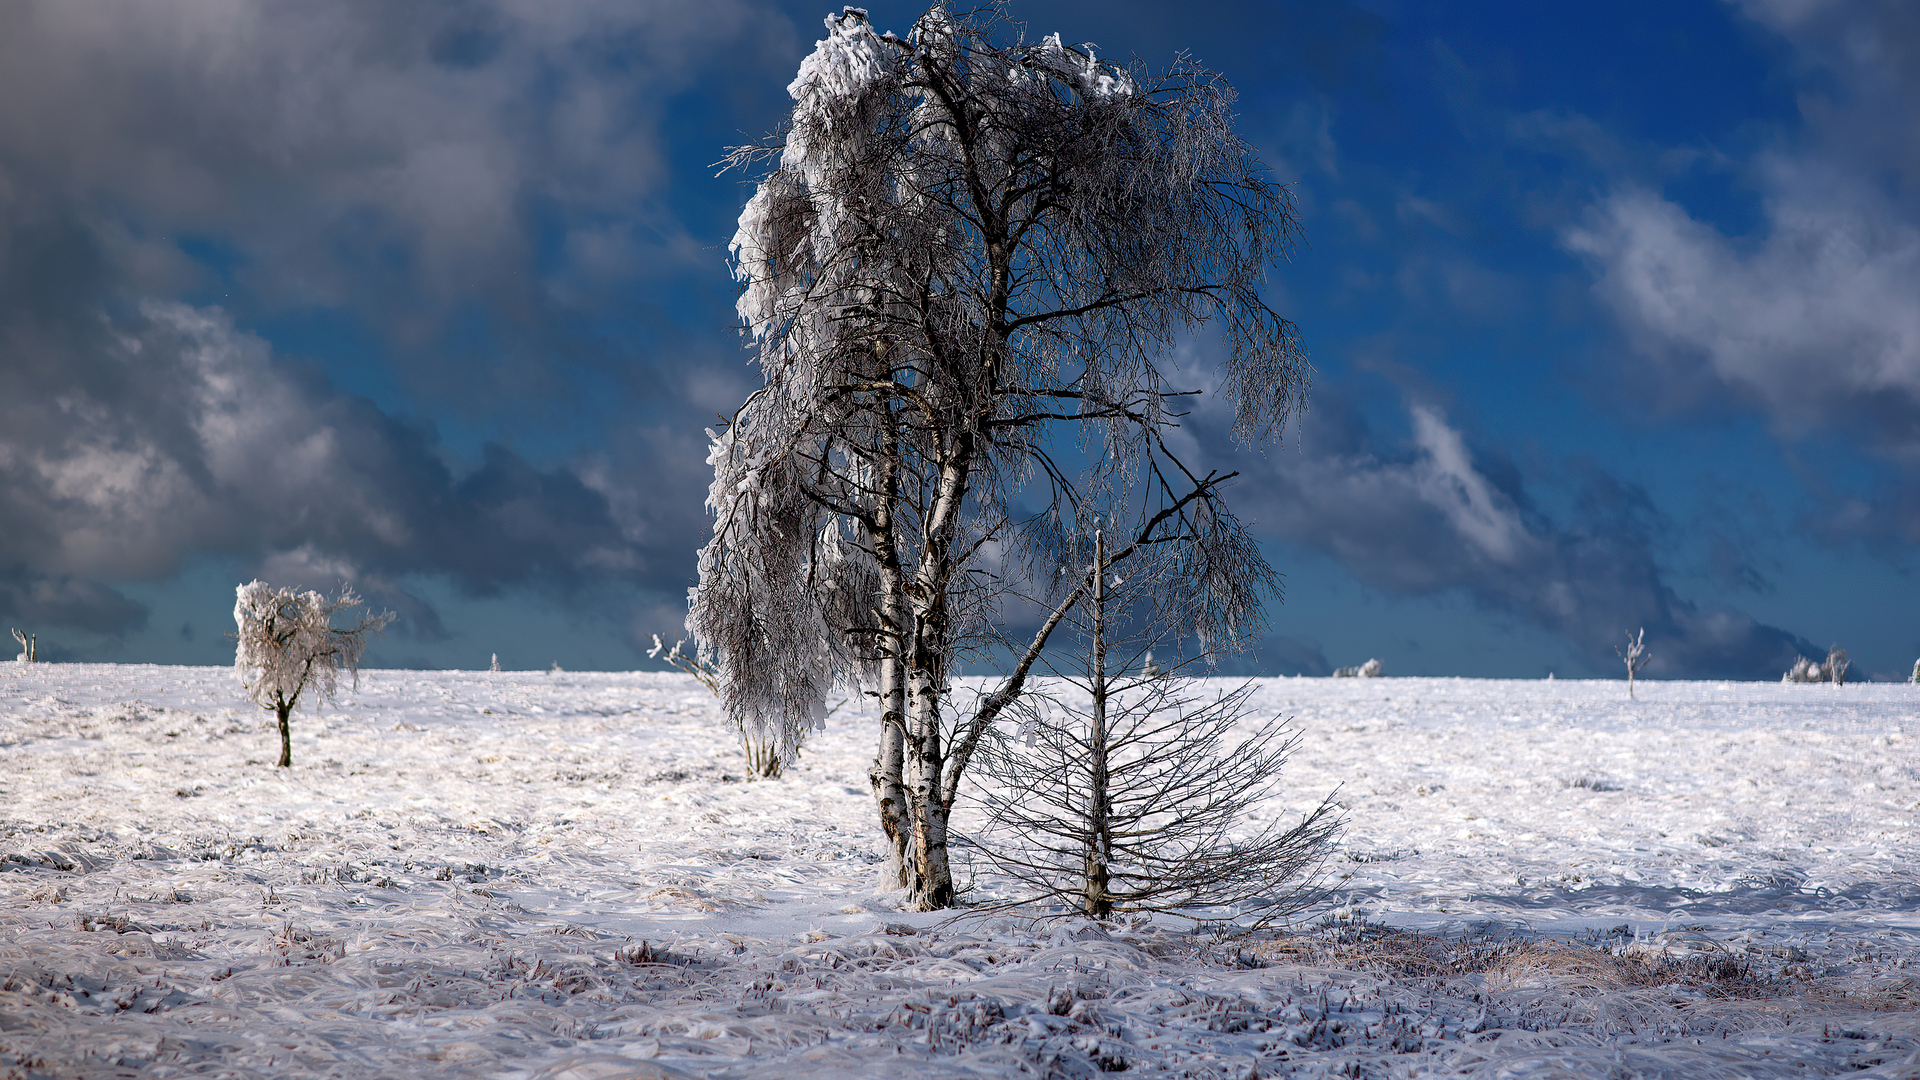 snow-outdoor-tree-4k-9u.jpg